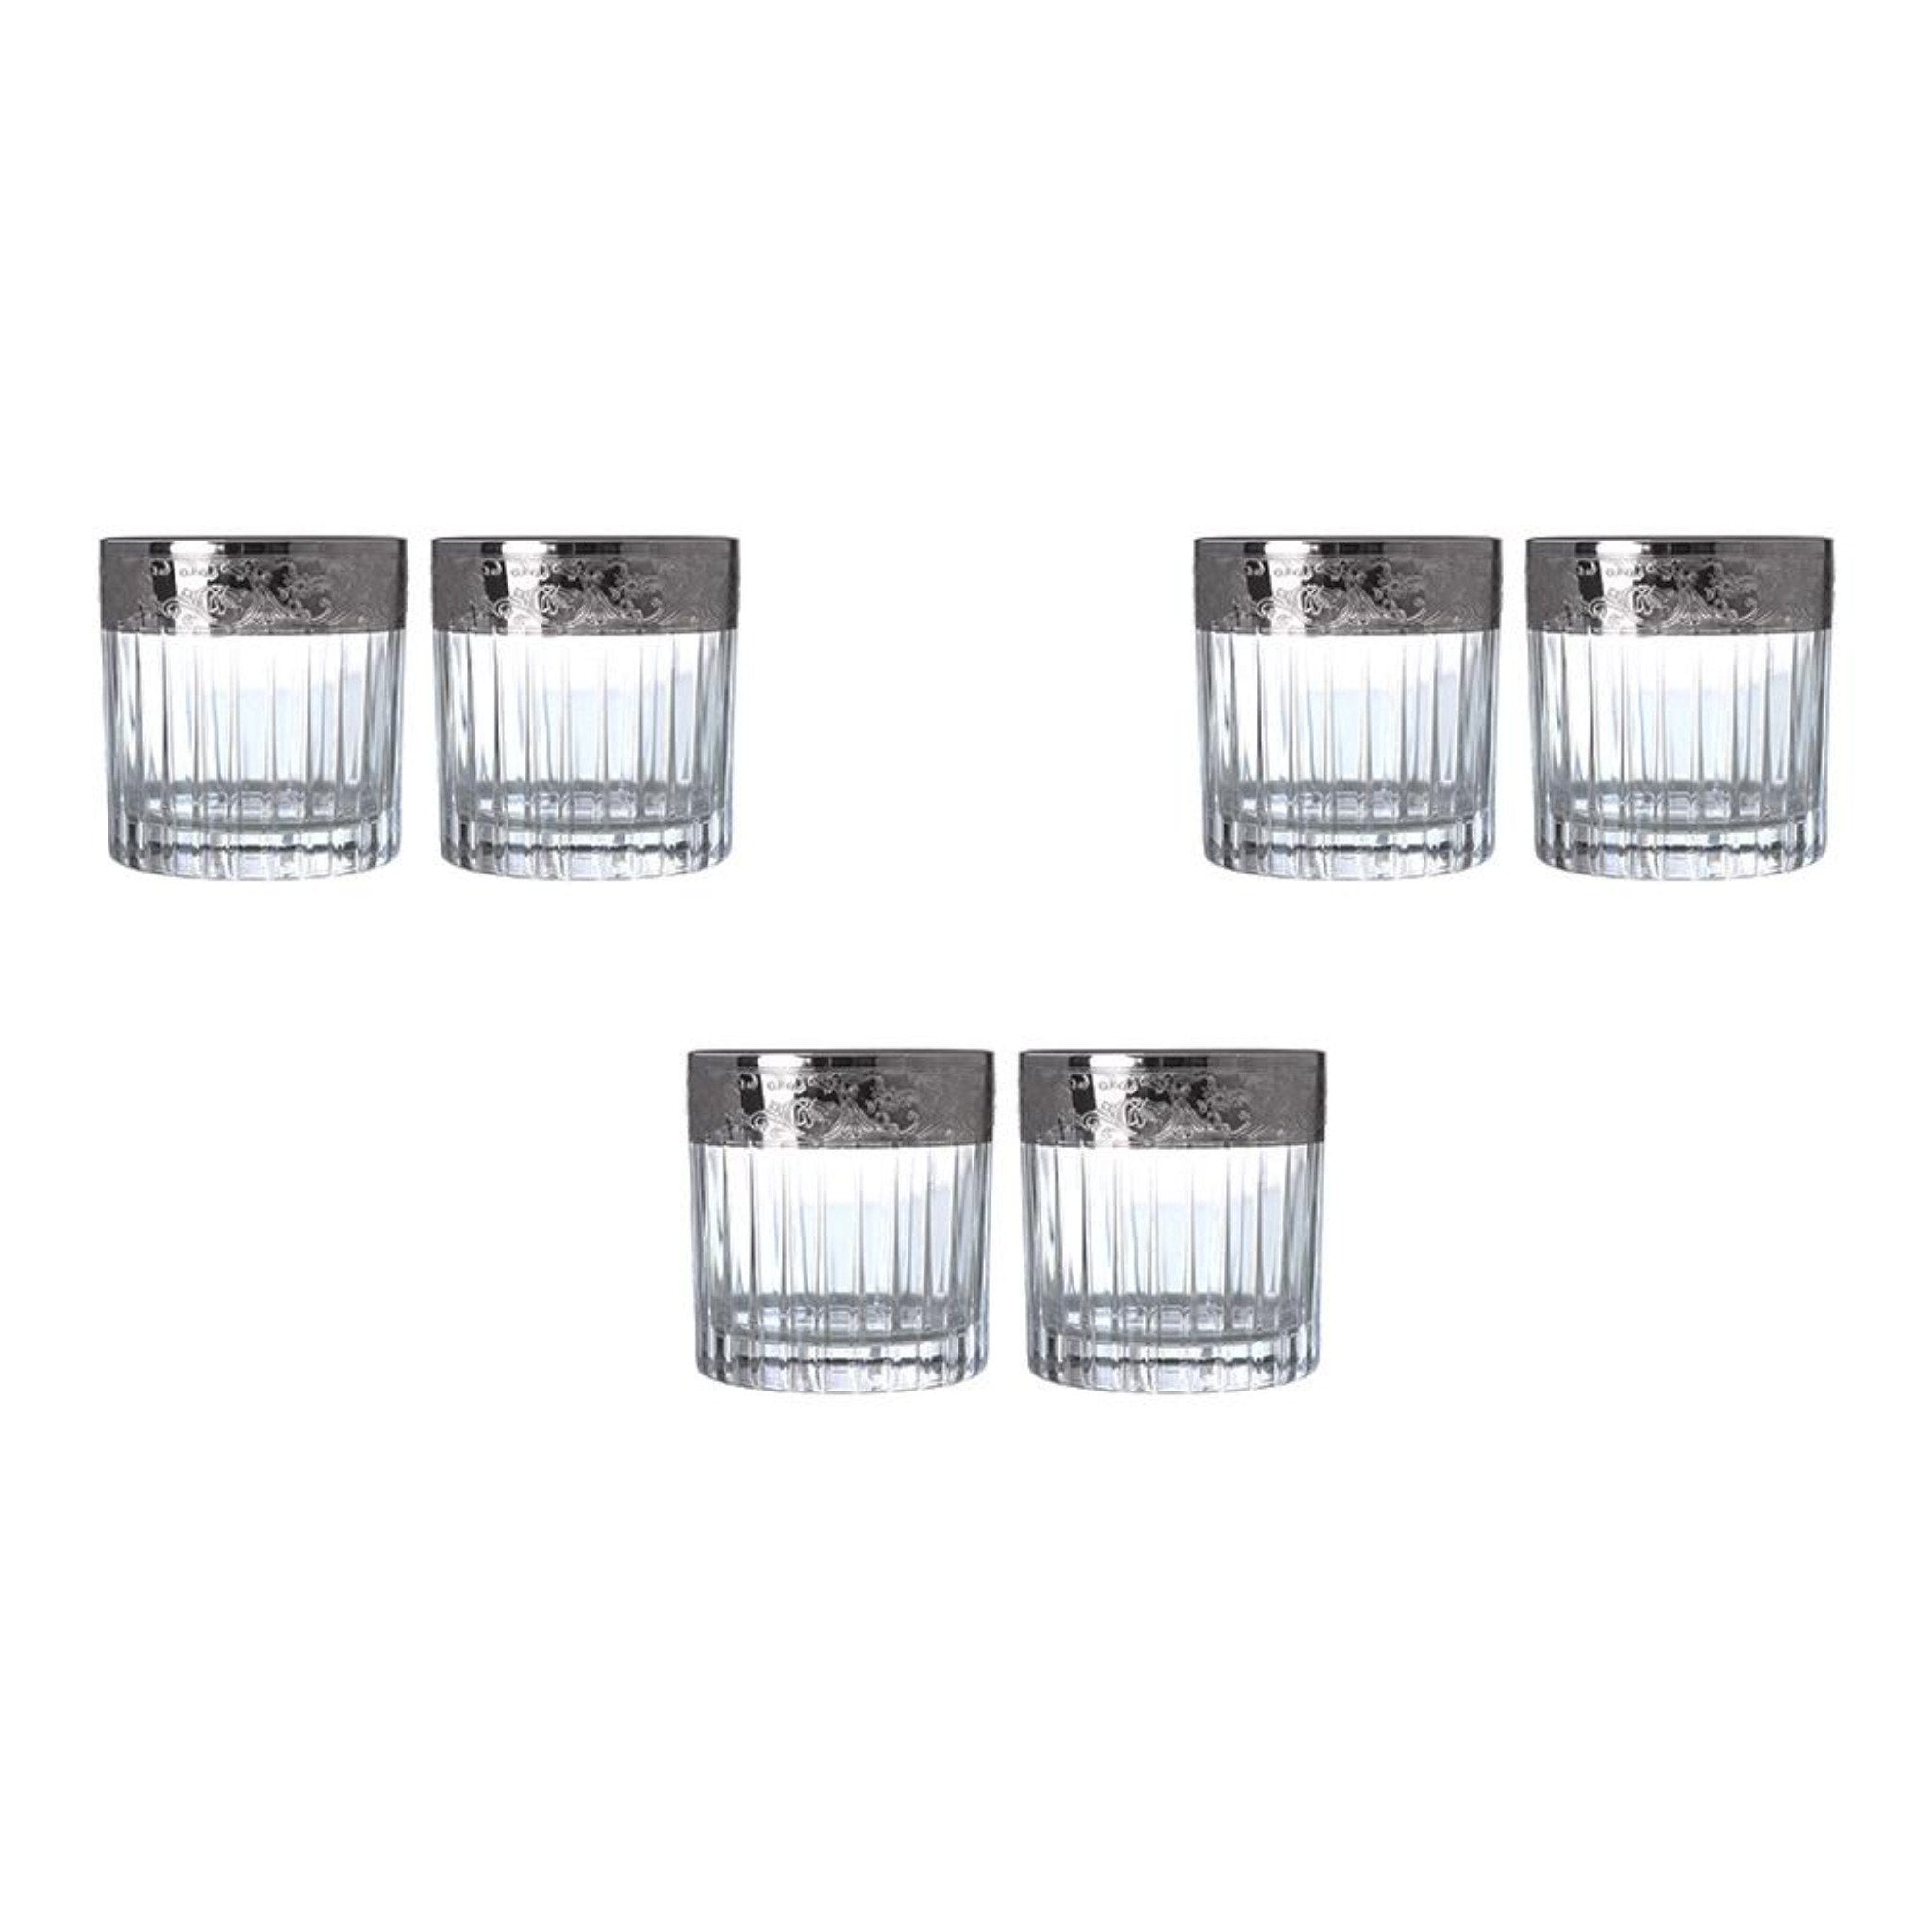 RCR Italy - Tumbler Glass Set 6 Pieces - Silver - 310ml - 380003121